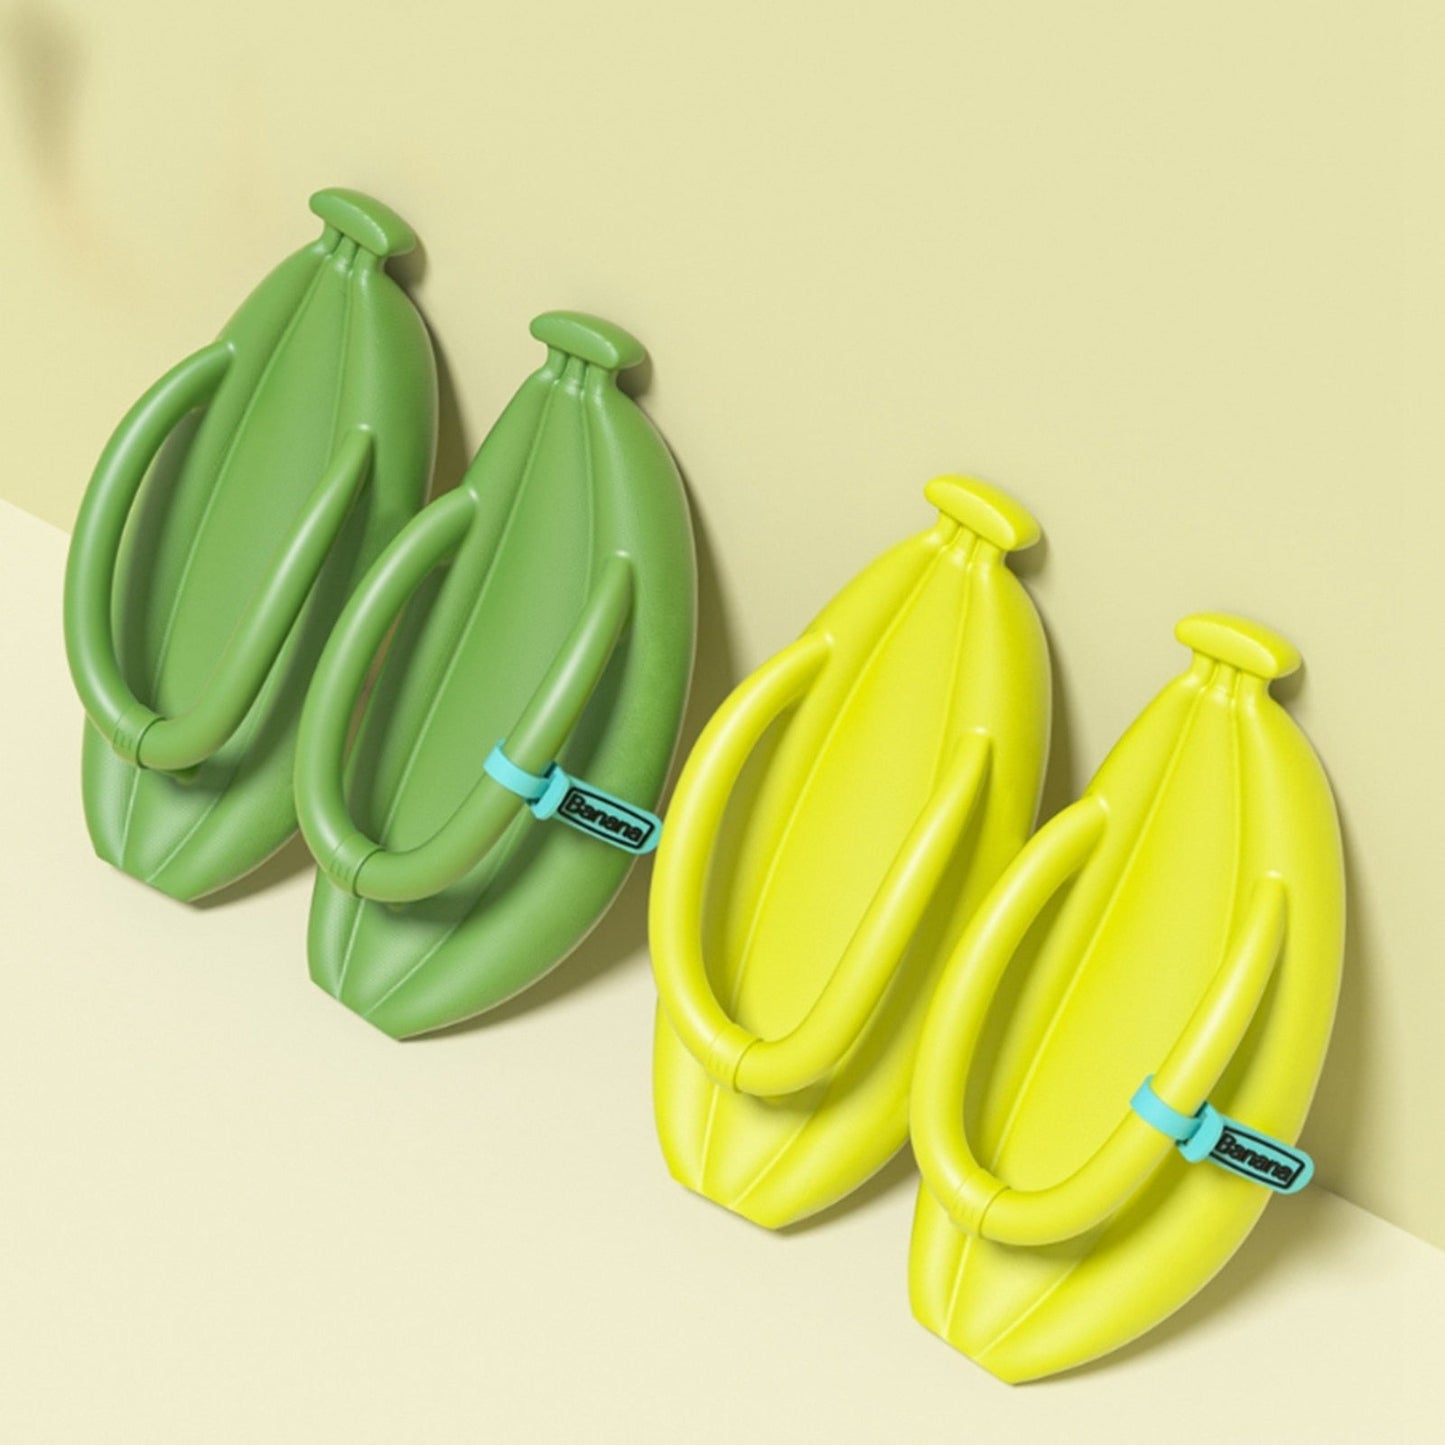 Plush Banana Comfy EVA Flip Flops